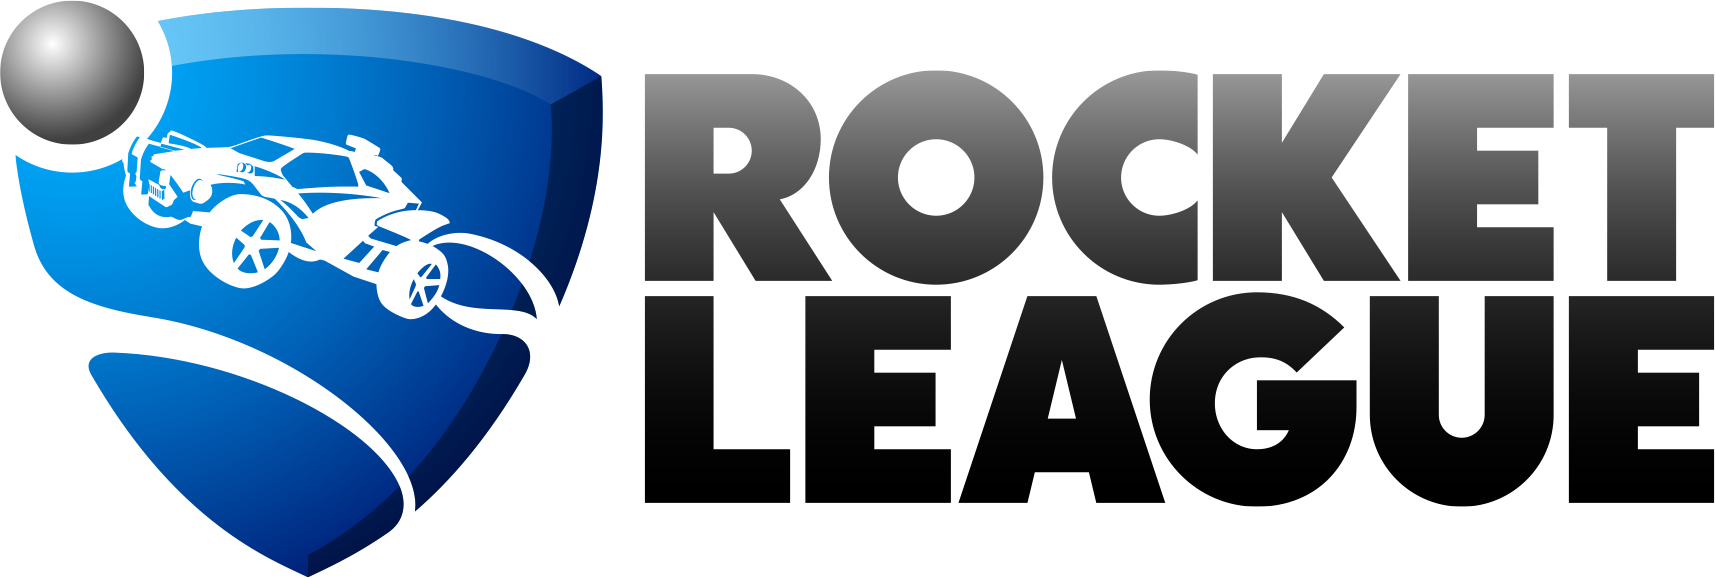 Rocket-League-logo